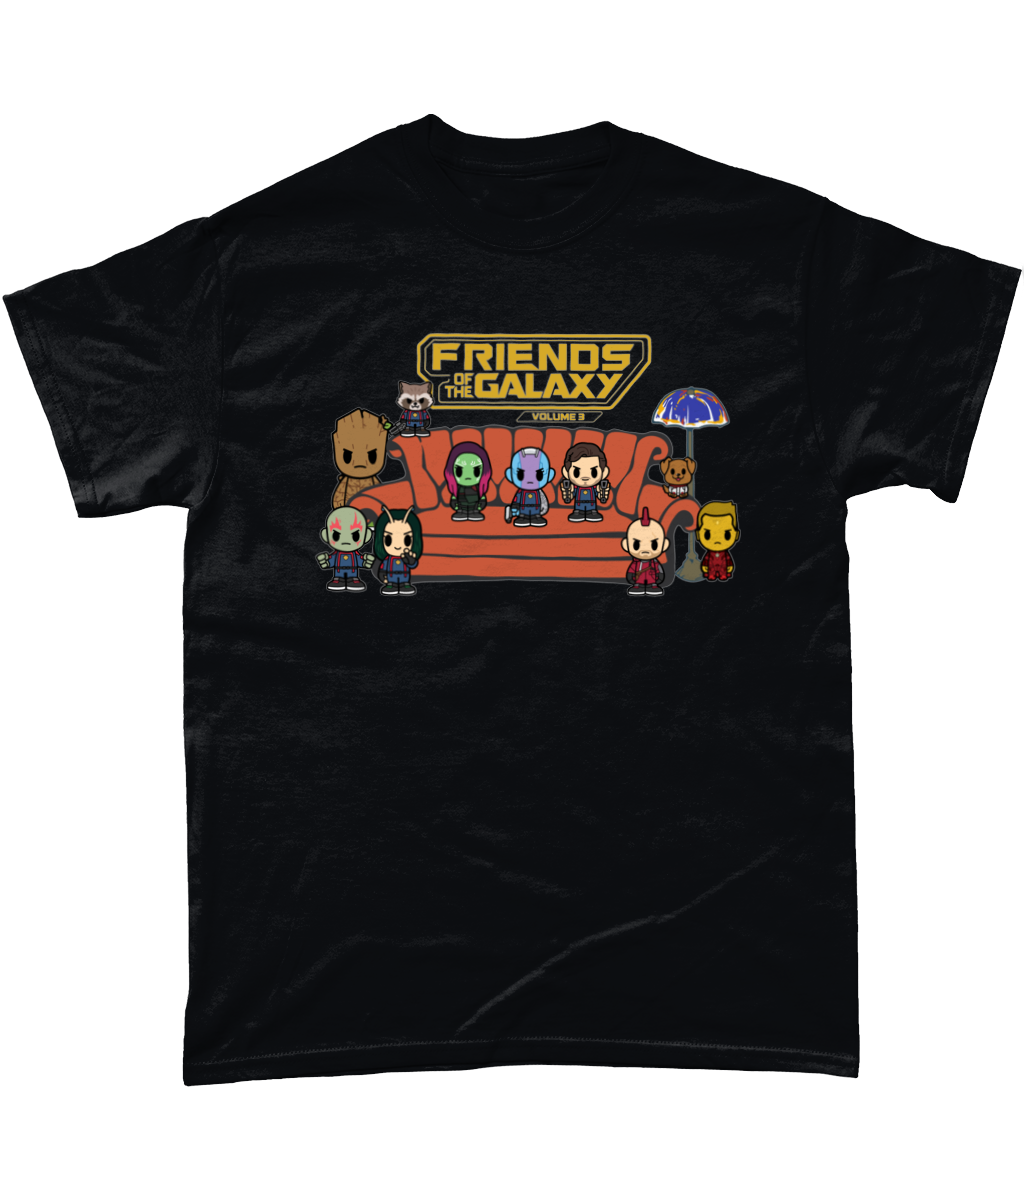 friends of the galaxy Vol 3 t-shirt